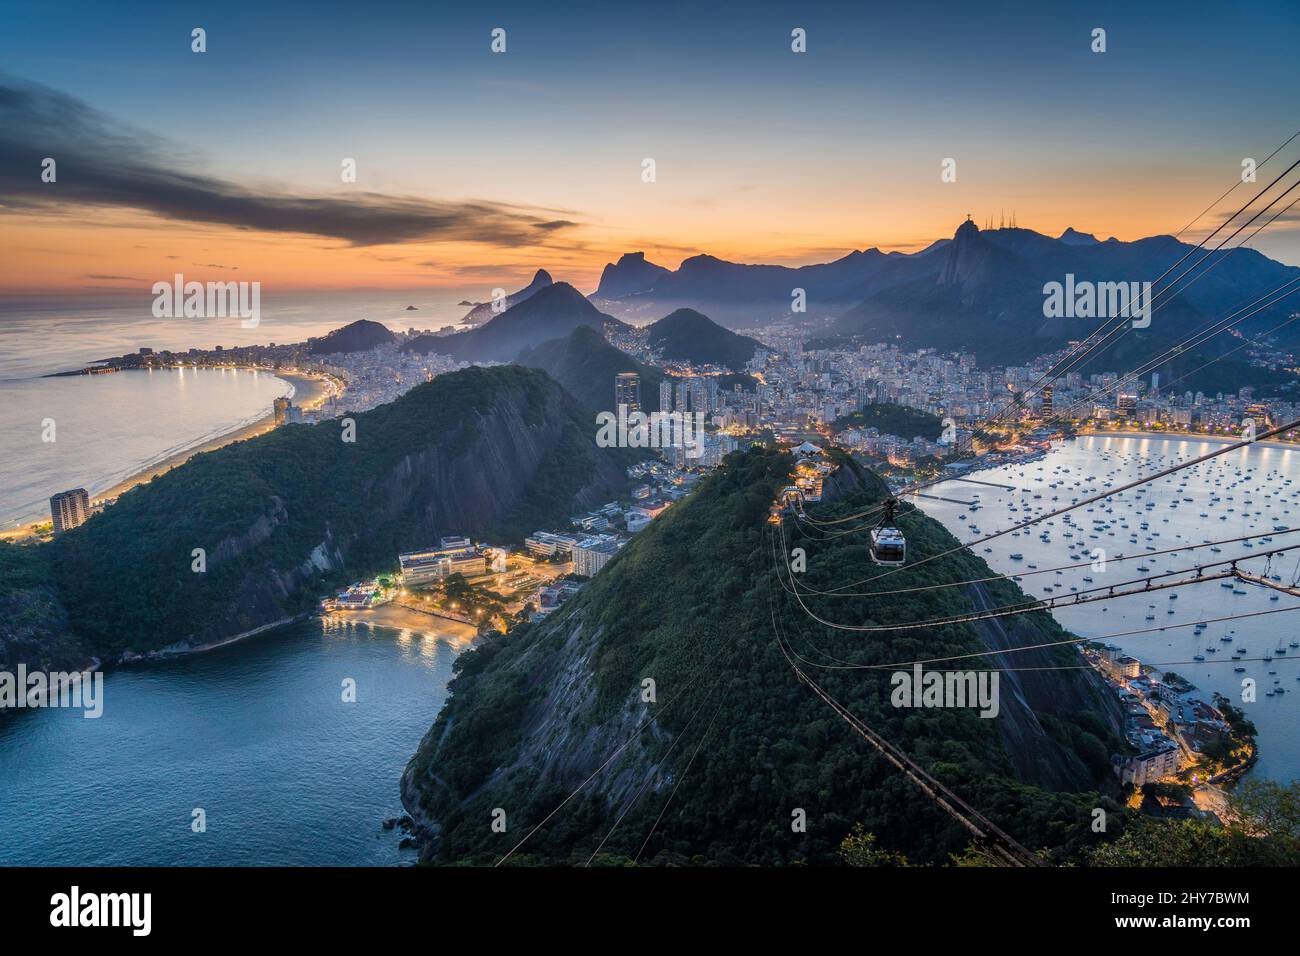 Rio de Janeiro cityscape at sunset, Brazil, South America. Stock Photo